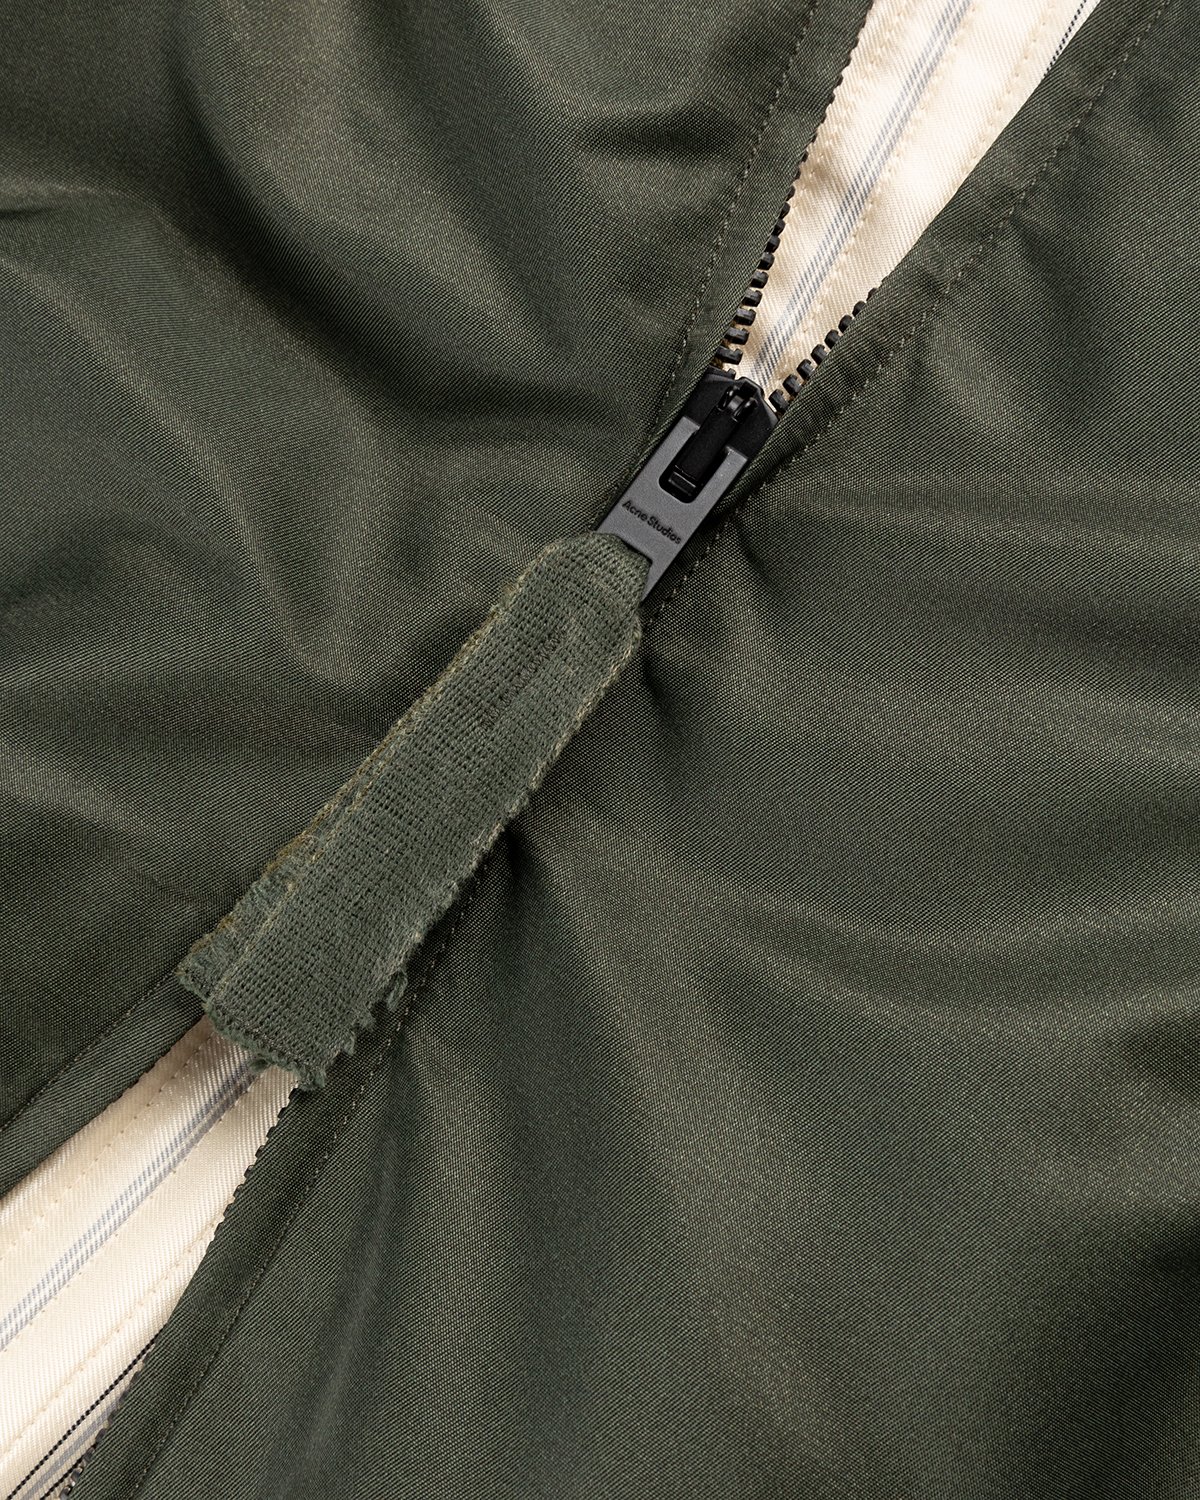 Acne Studios - Satin Bomber Jacket Olive Green - Clothing - Green - Image 6